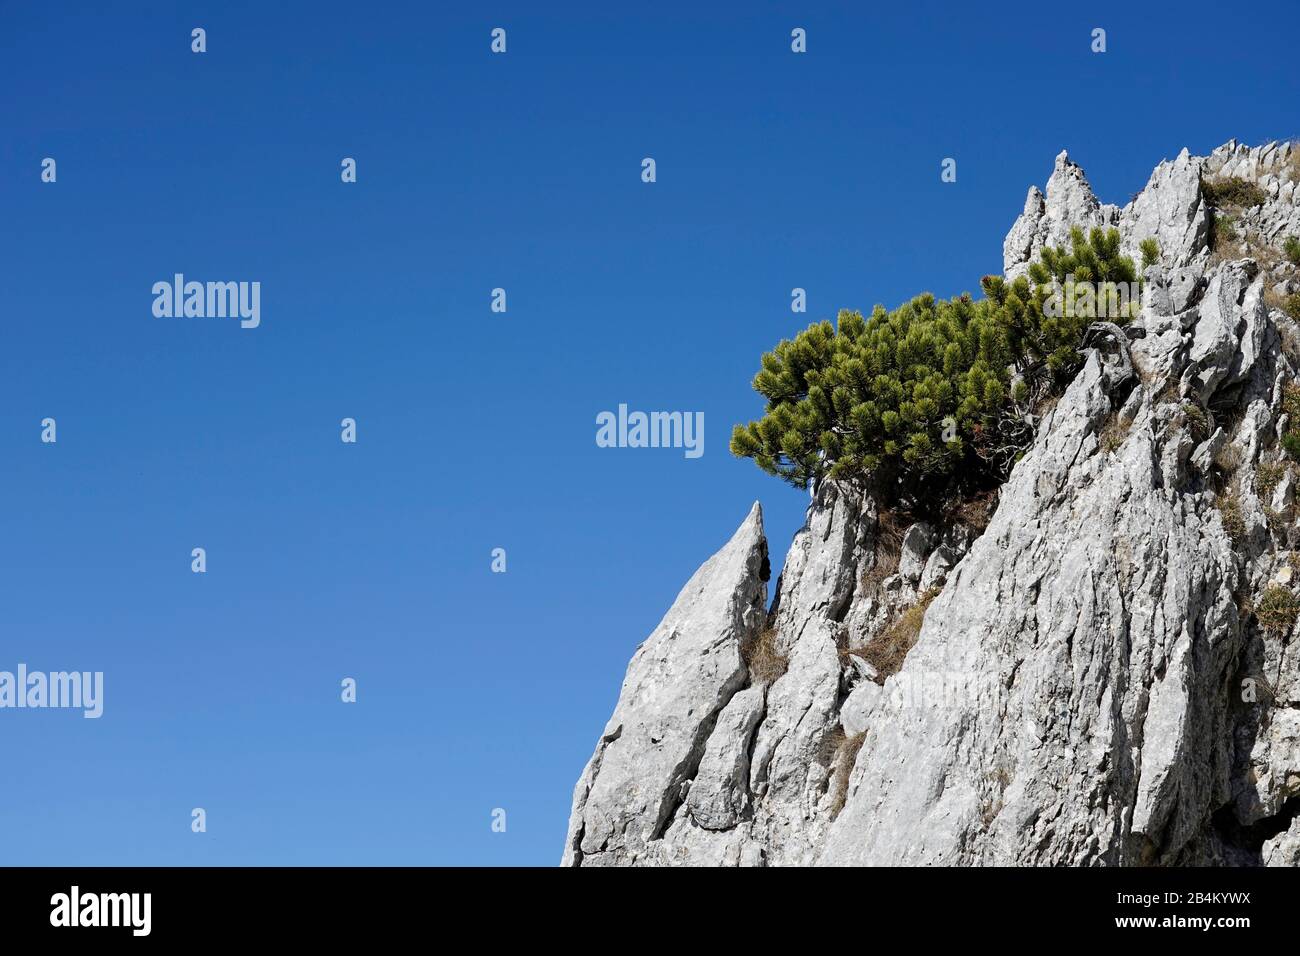 Germany, Bavaria, Upper Bavaria, Ruhpolding, Chiemgau Alps, Hörndlwand, 1684m, rock face, growing mountain pine, symbol Stock Photo